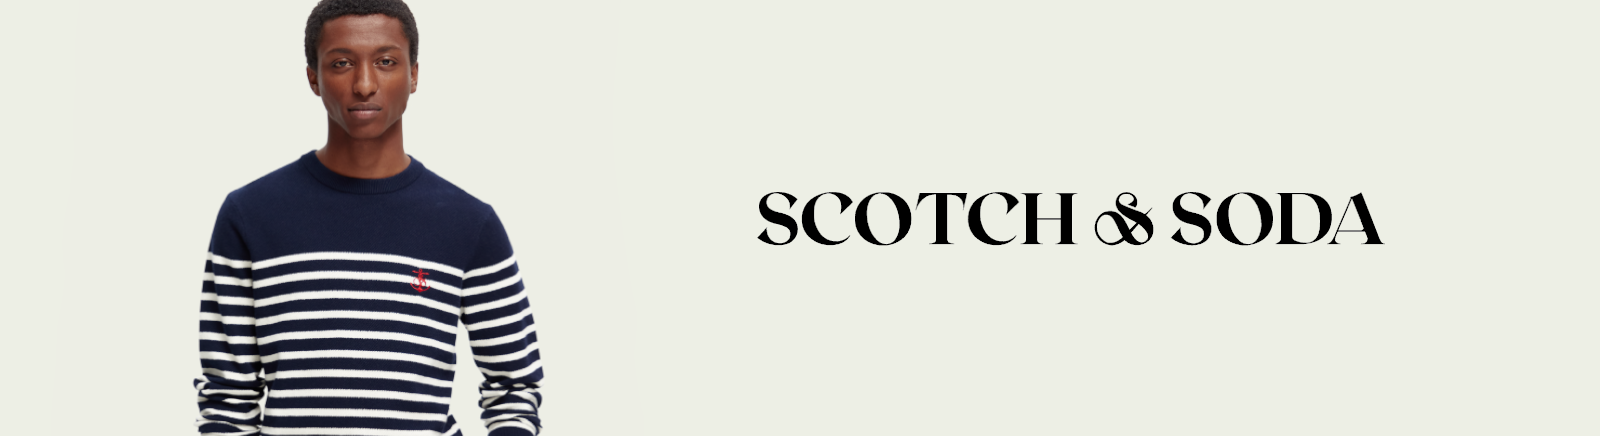 Juppen: Scotch & Soda Winterboots für Damen online shoppen